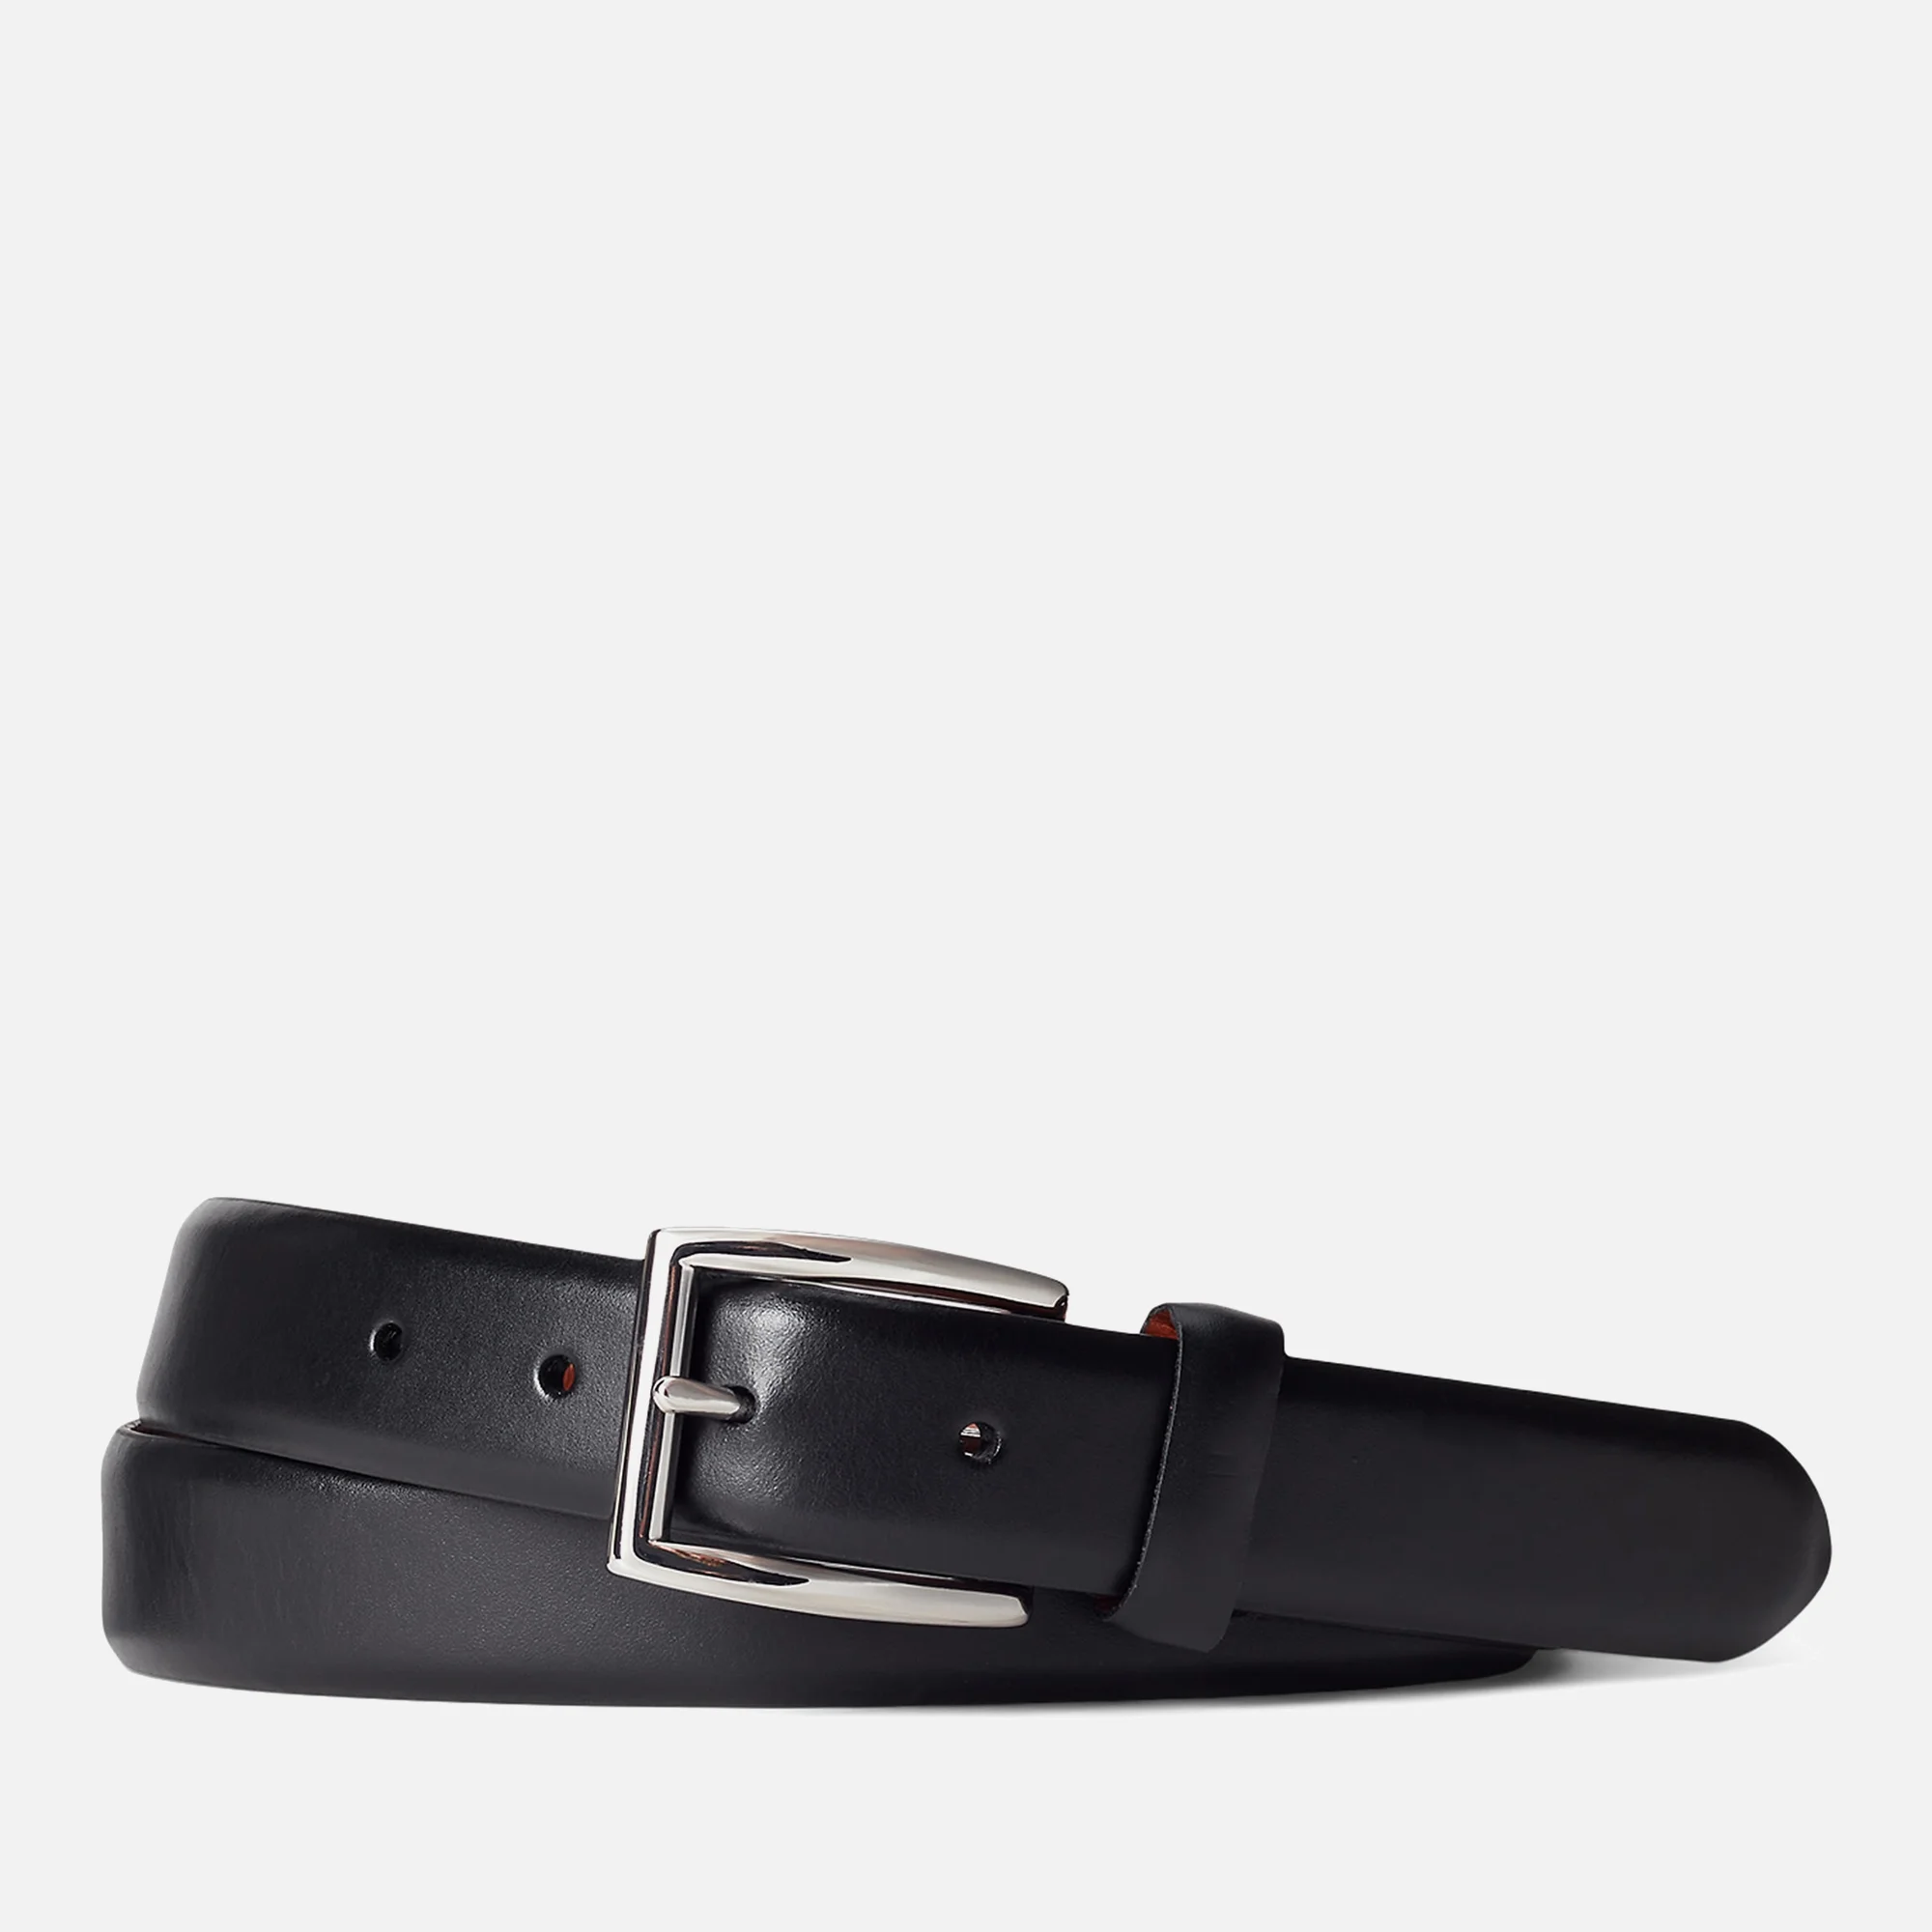 Polo Ralph Lauren Harness Leather Belt Image 1